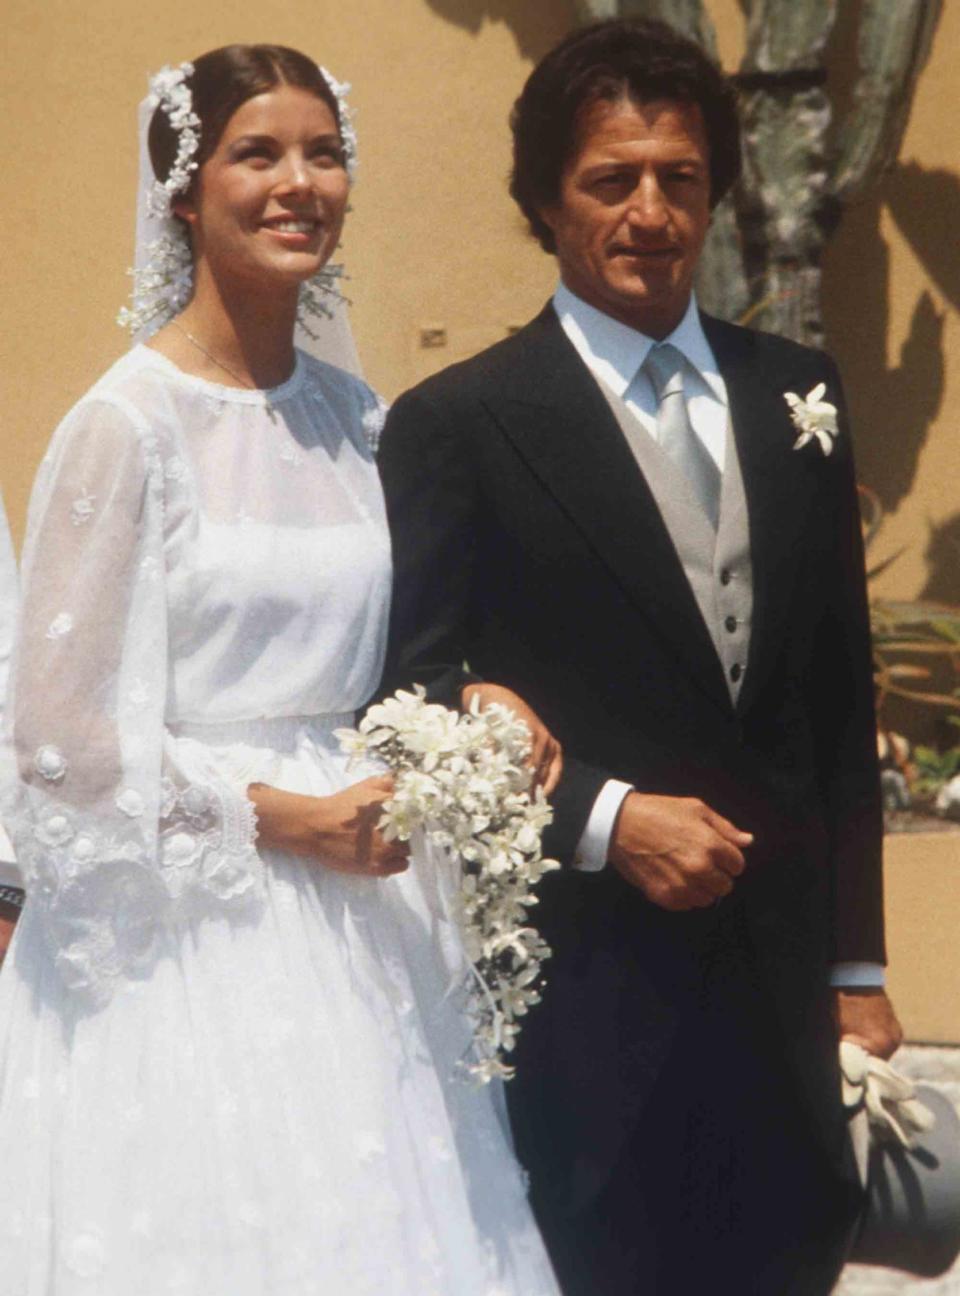 Princess Caroline and Philippe Junot of Monaco